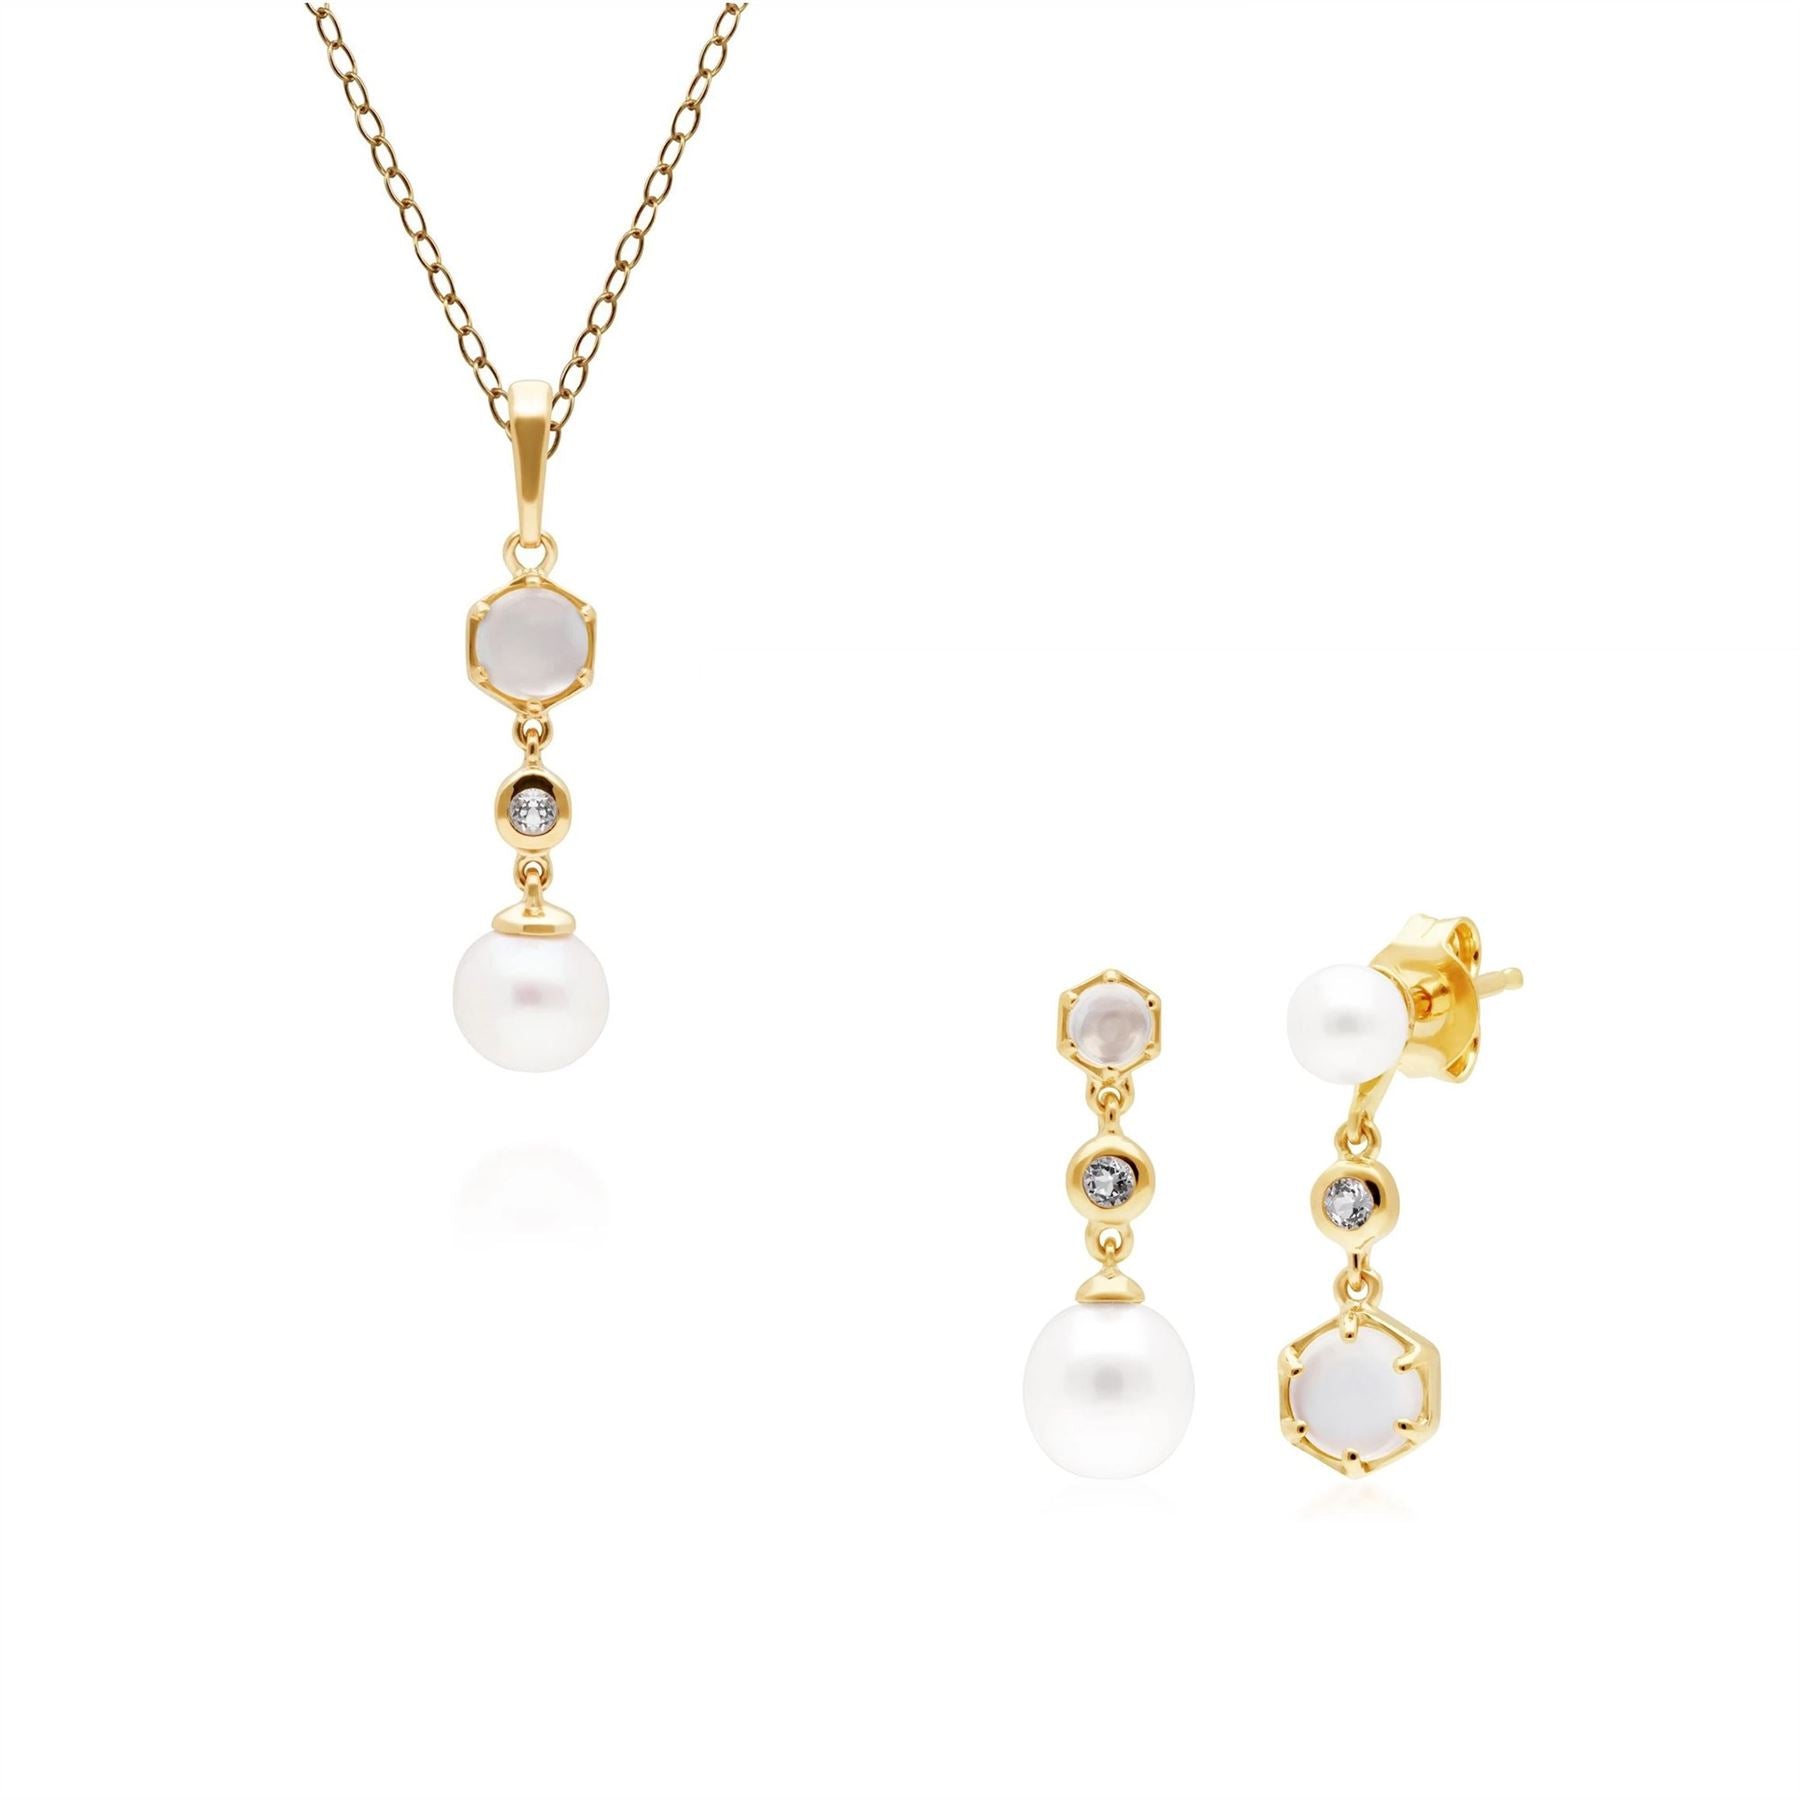 Modern Pearl, Topaz & Moonstone Pendant & Earring Set in Gold Plated Sterling Silver